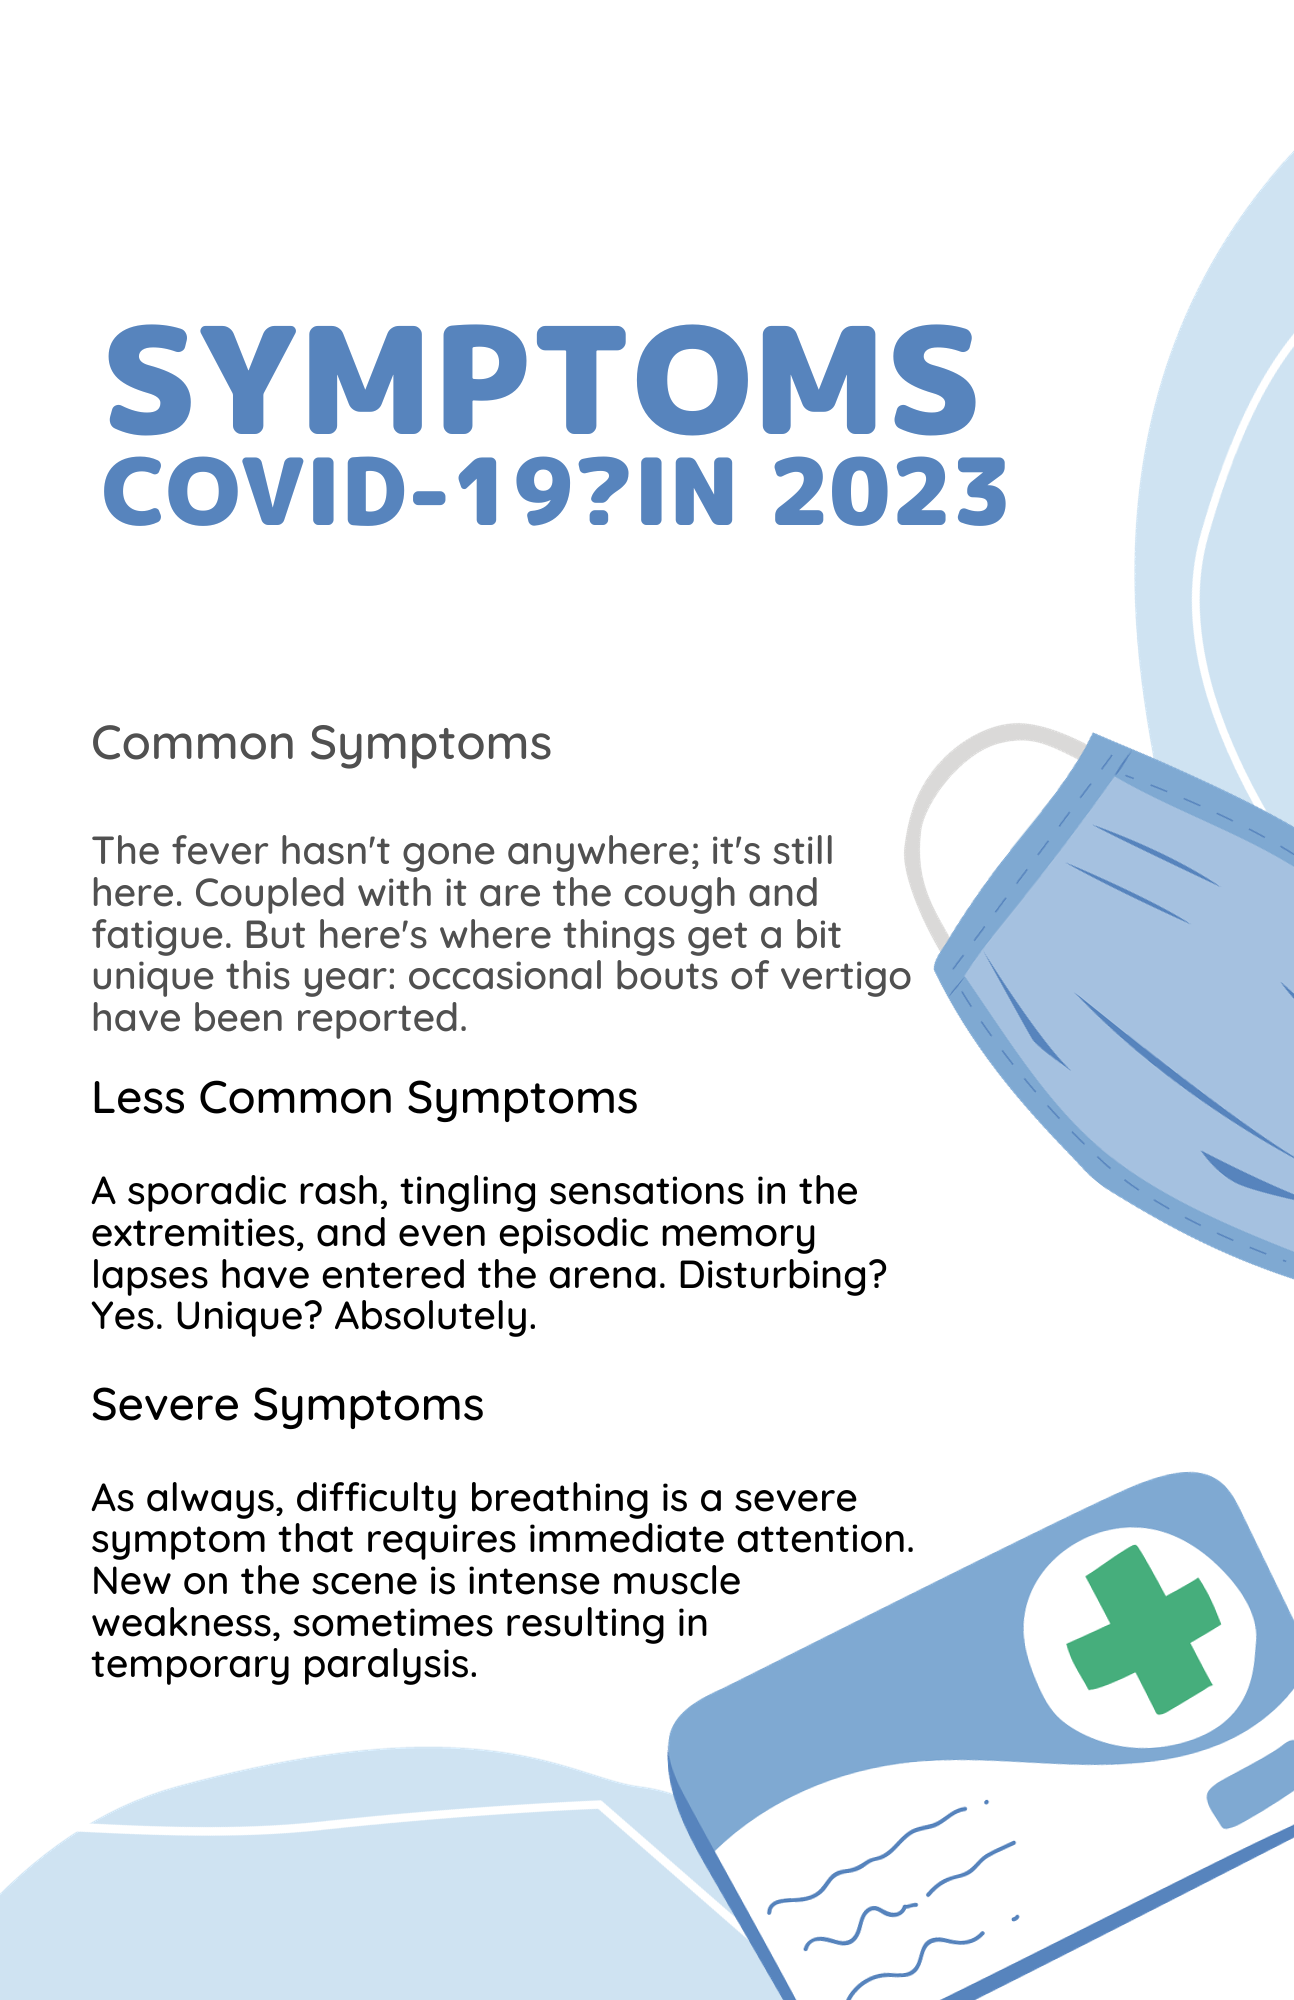 COVID Symptoms in 2023